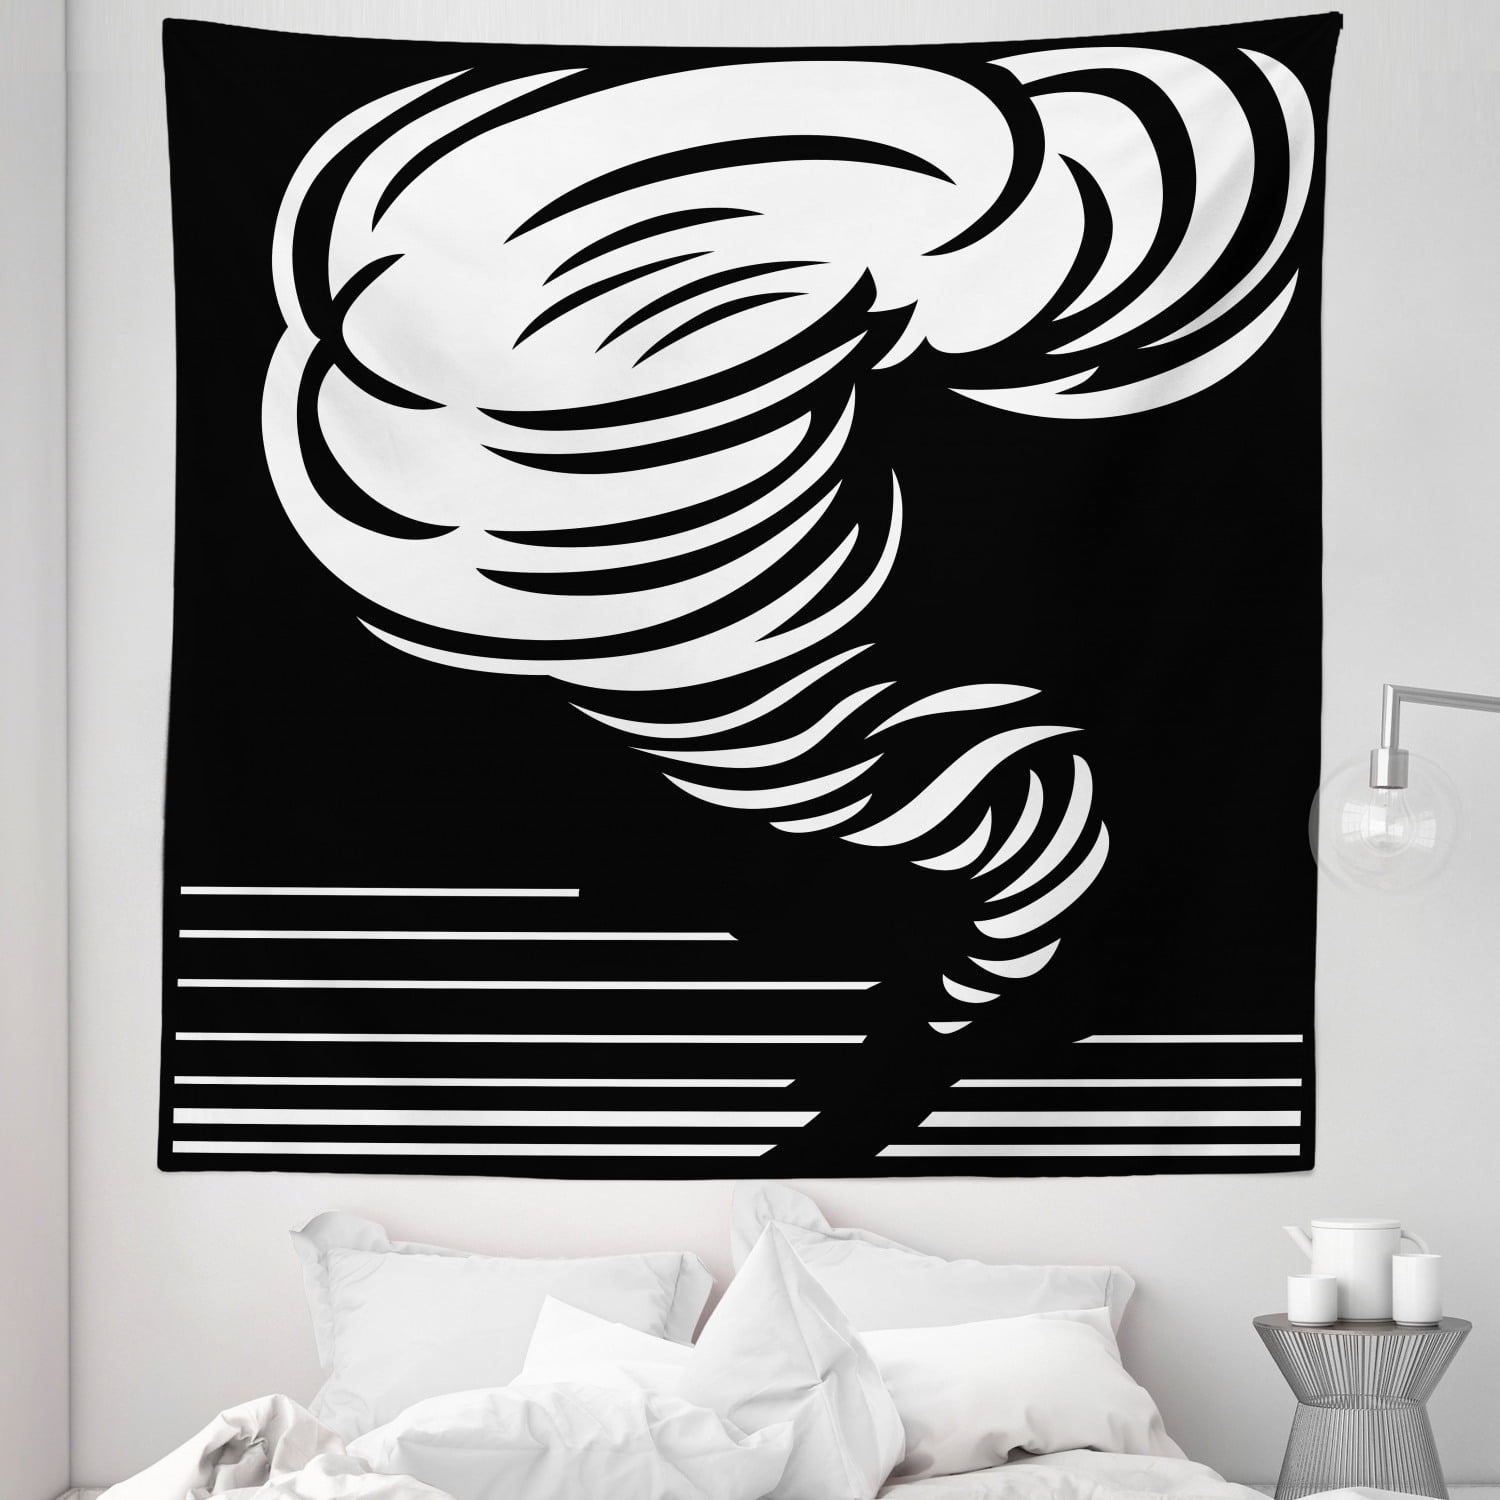 Tornado Lightning Tapestry Wall Hanging Mandala Bedspread Indian Home Decor 